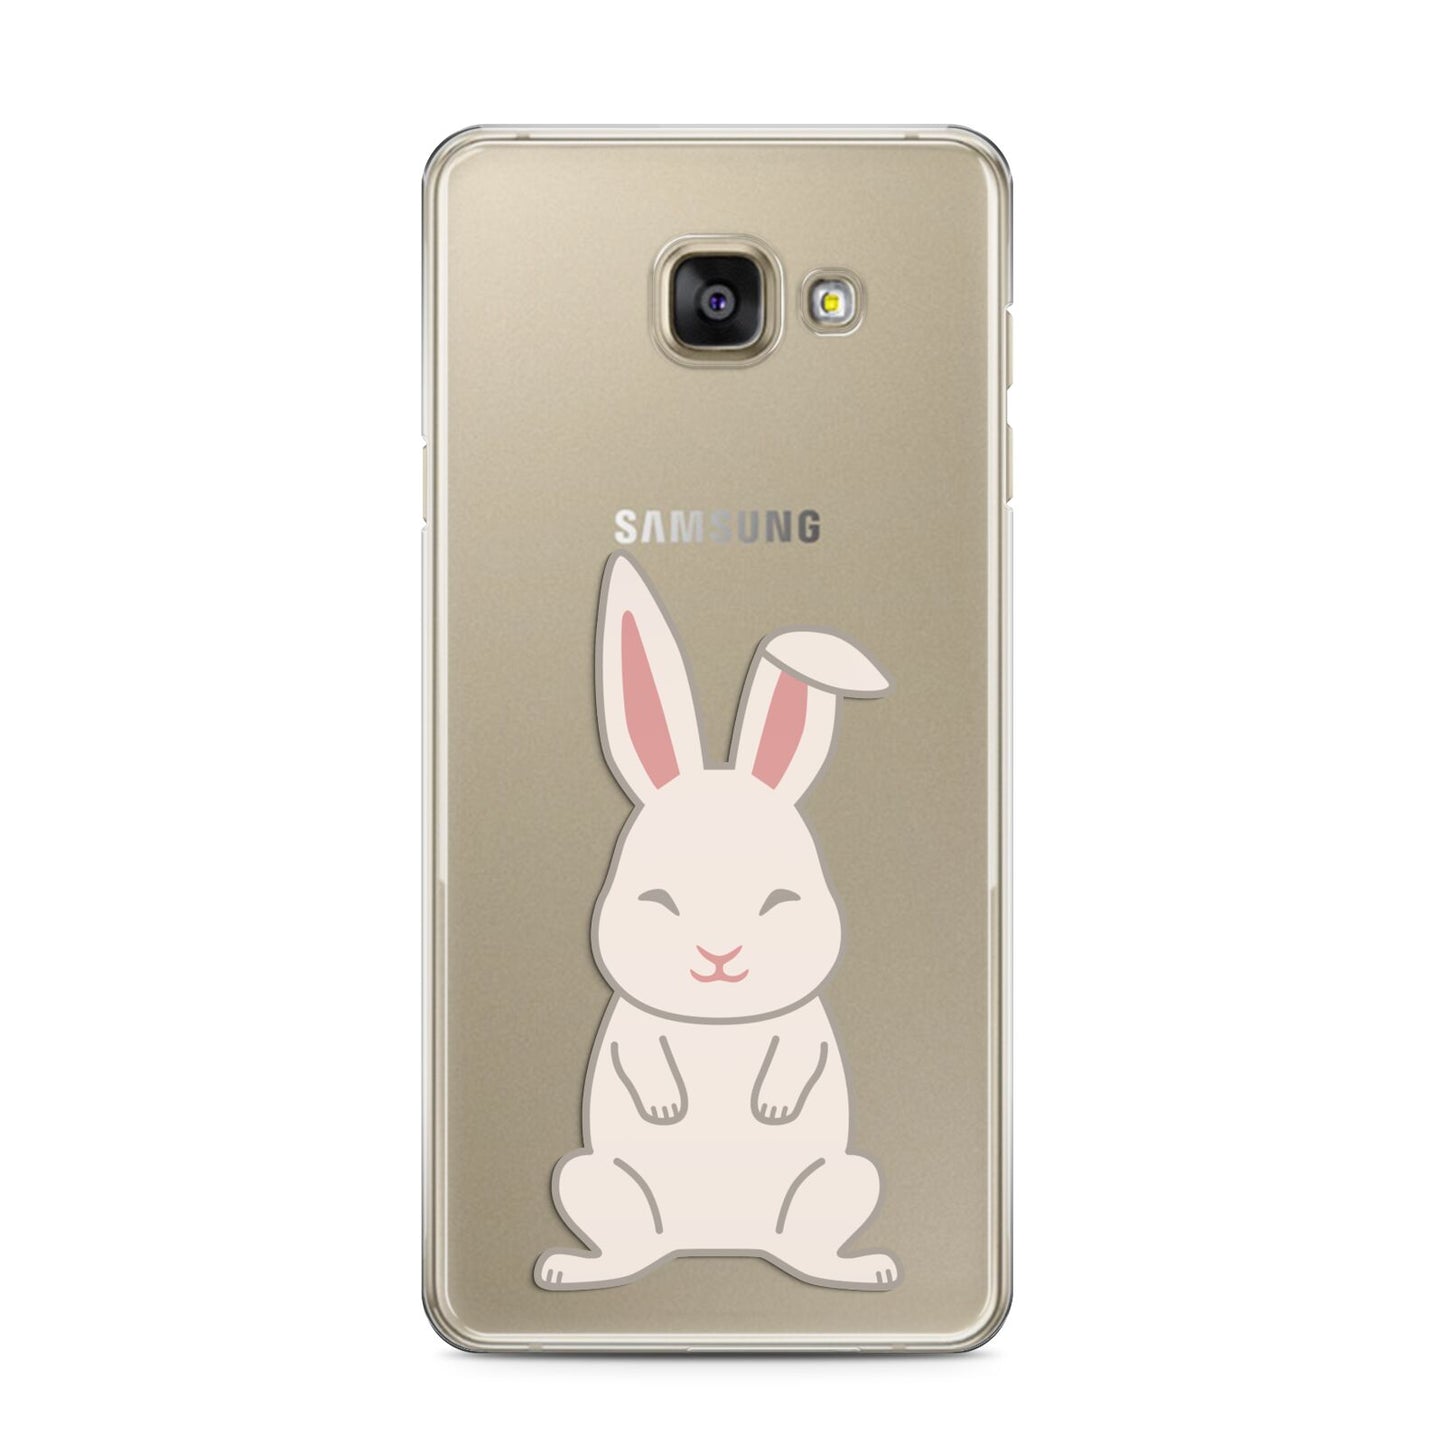 Bunny Samsung Galaxy A3 2016 Case on gold phone